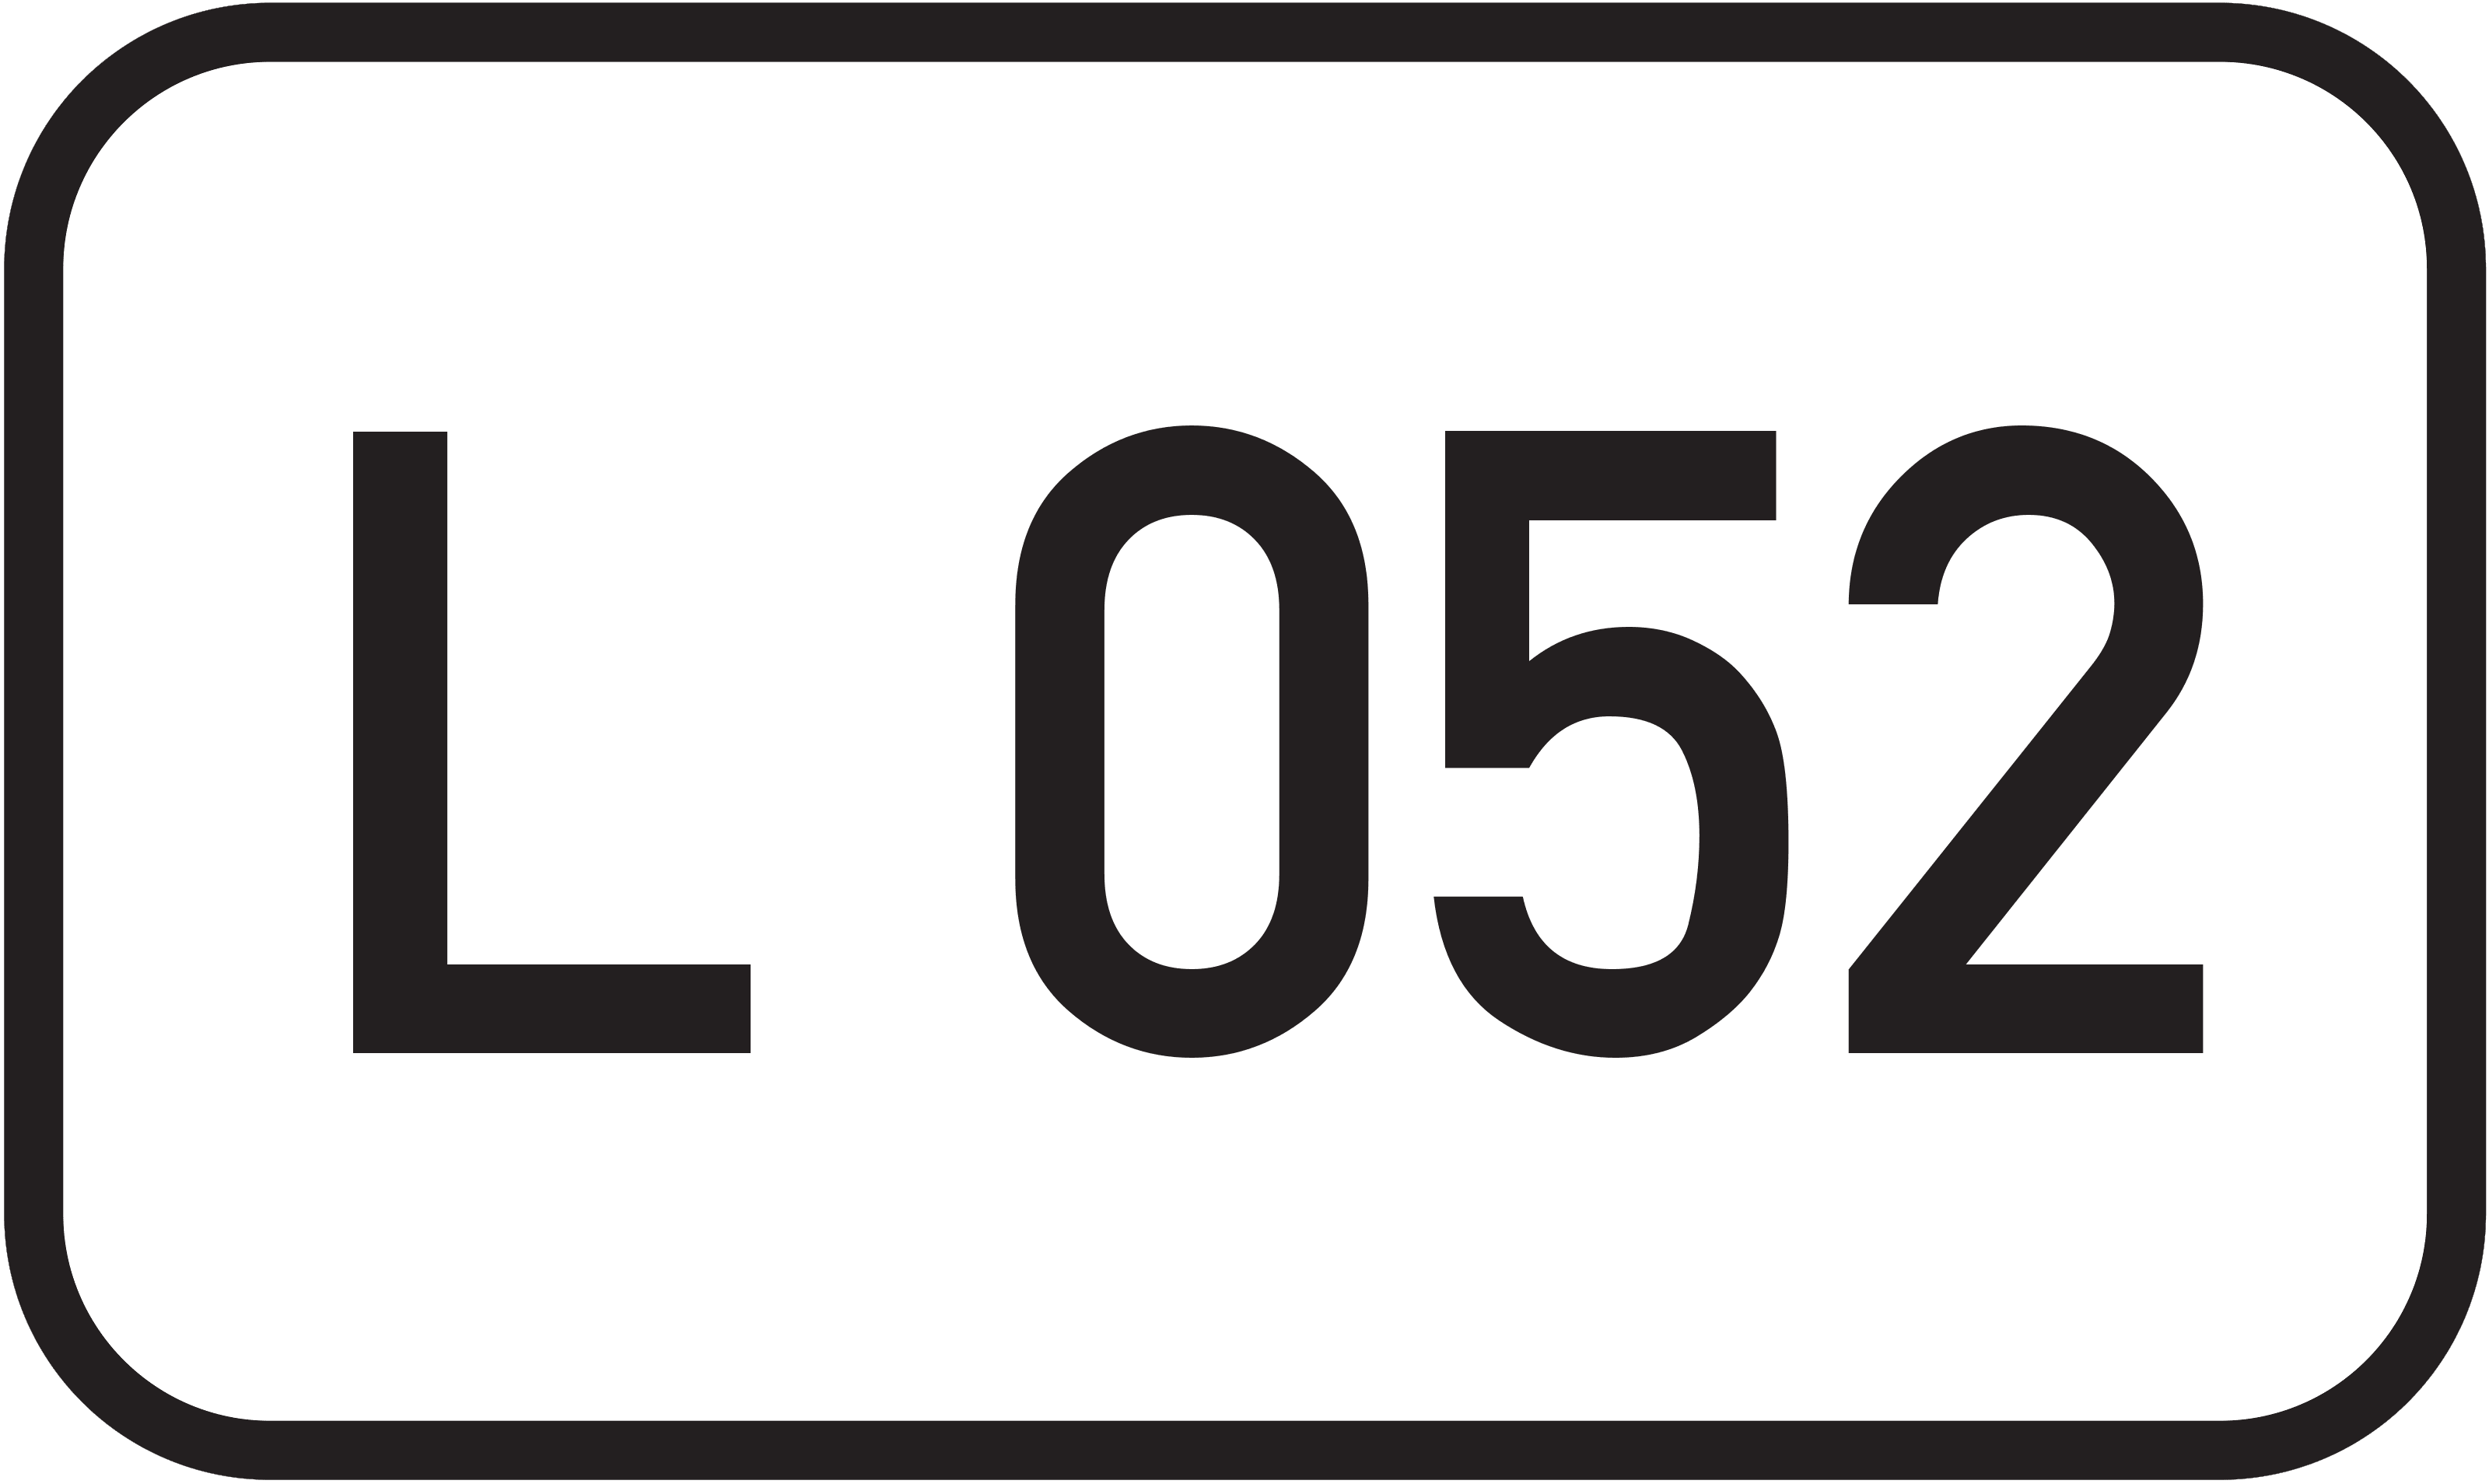 Straßenschild Landesstraße L 052